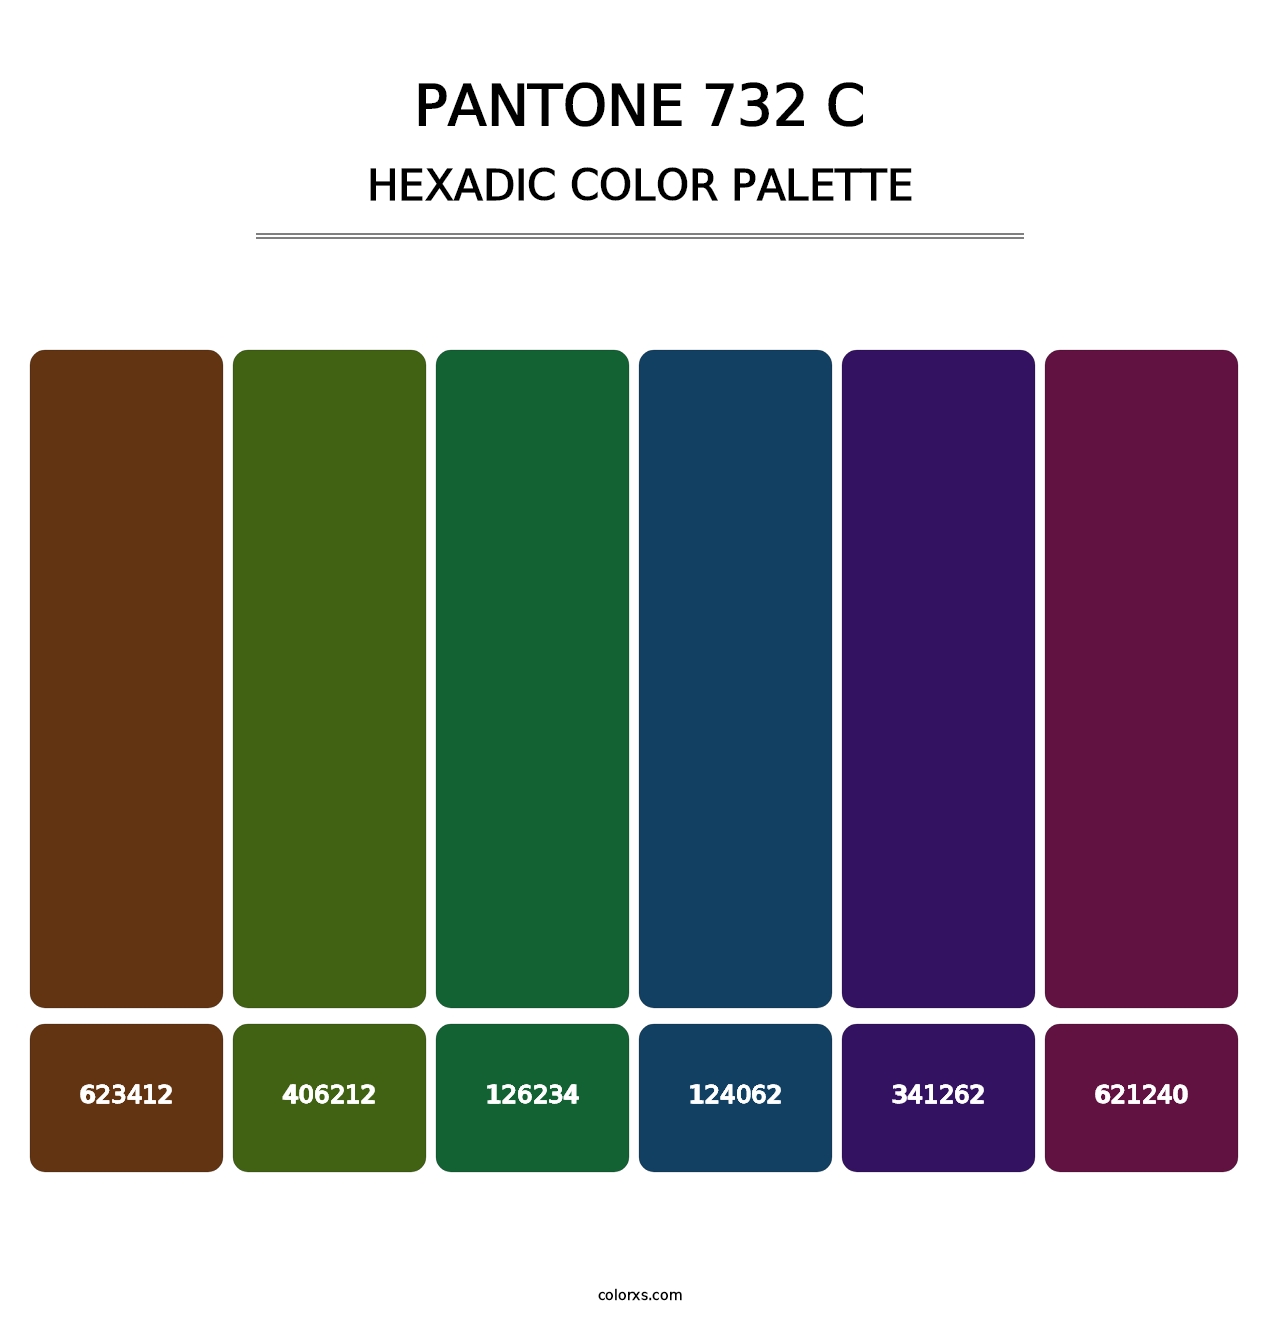 PANTONE 732 C - Hexadic Color Palette